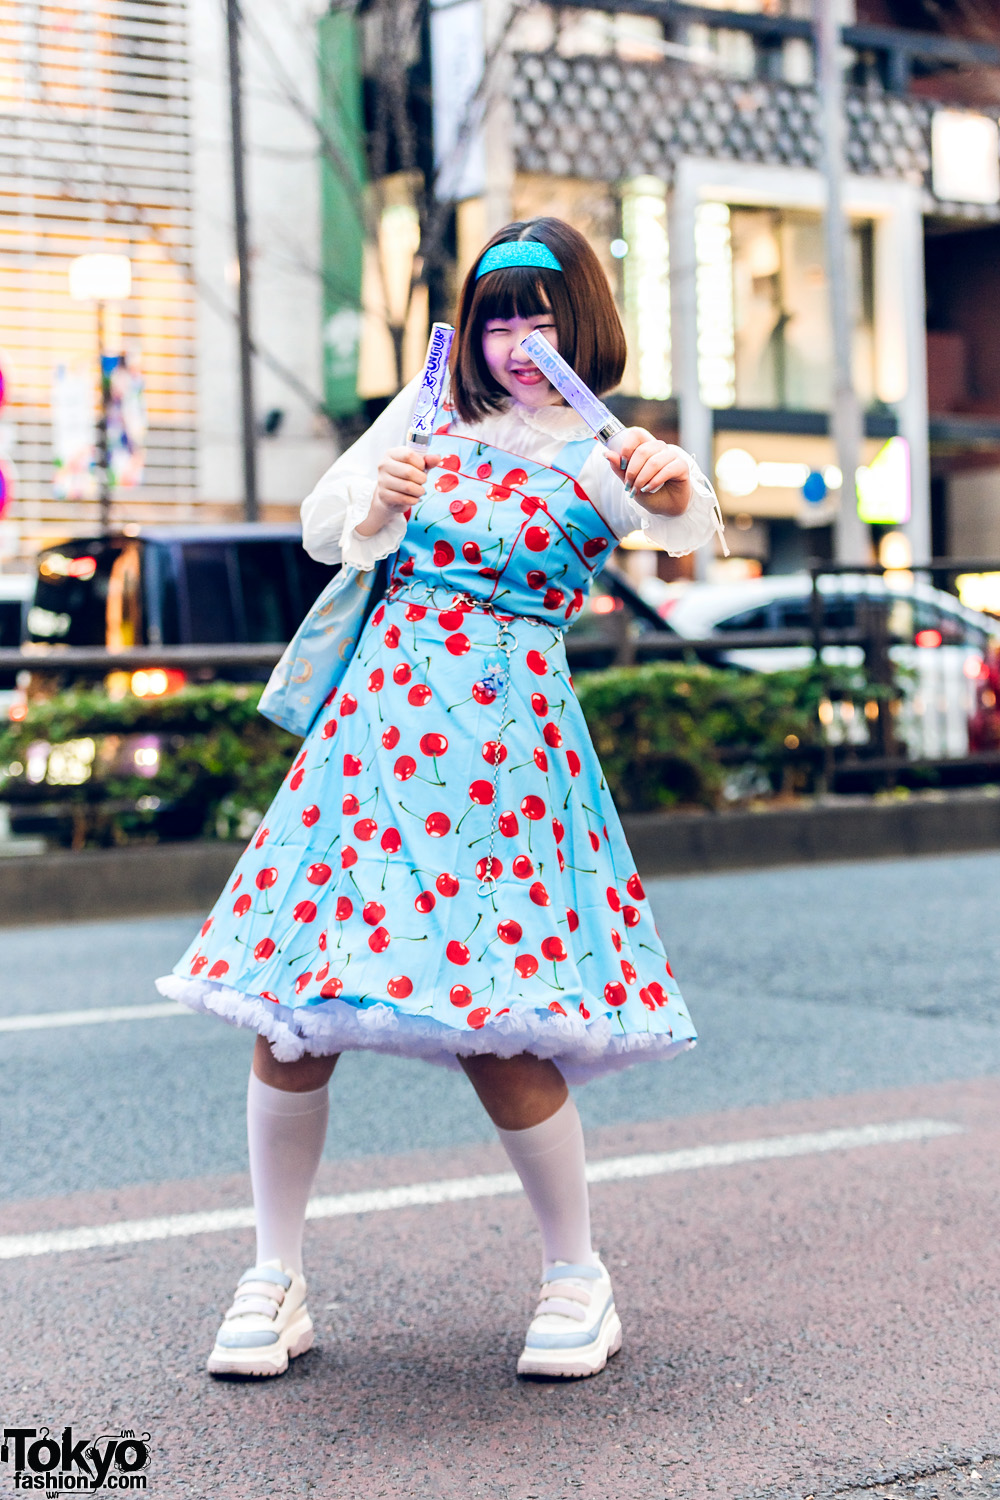 Harajuku Girl Style w/ Headband, Cherry Print Jumper Dress, Moon Print Tote Bag & Pastel Sneakers